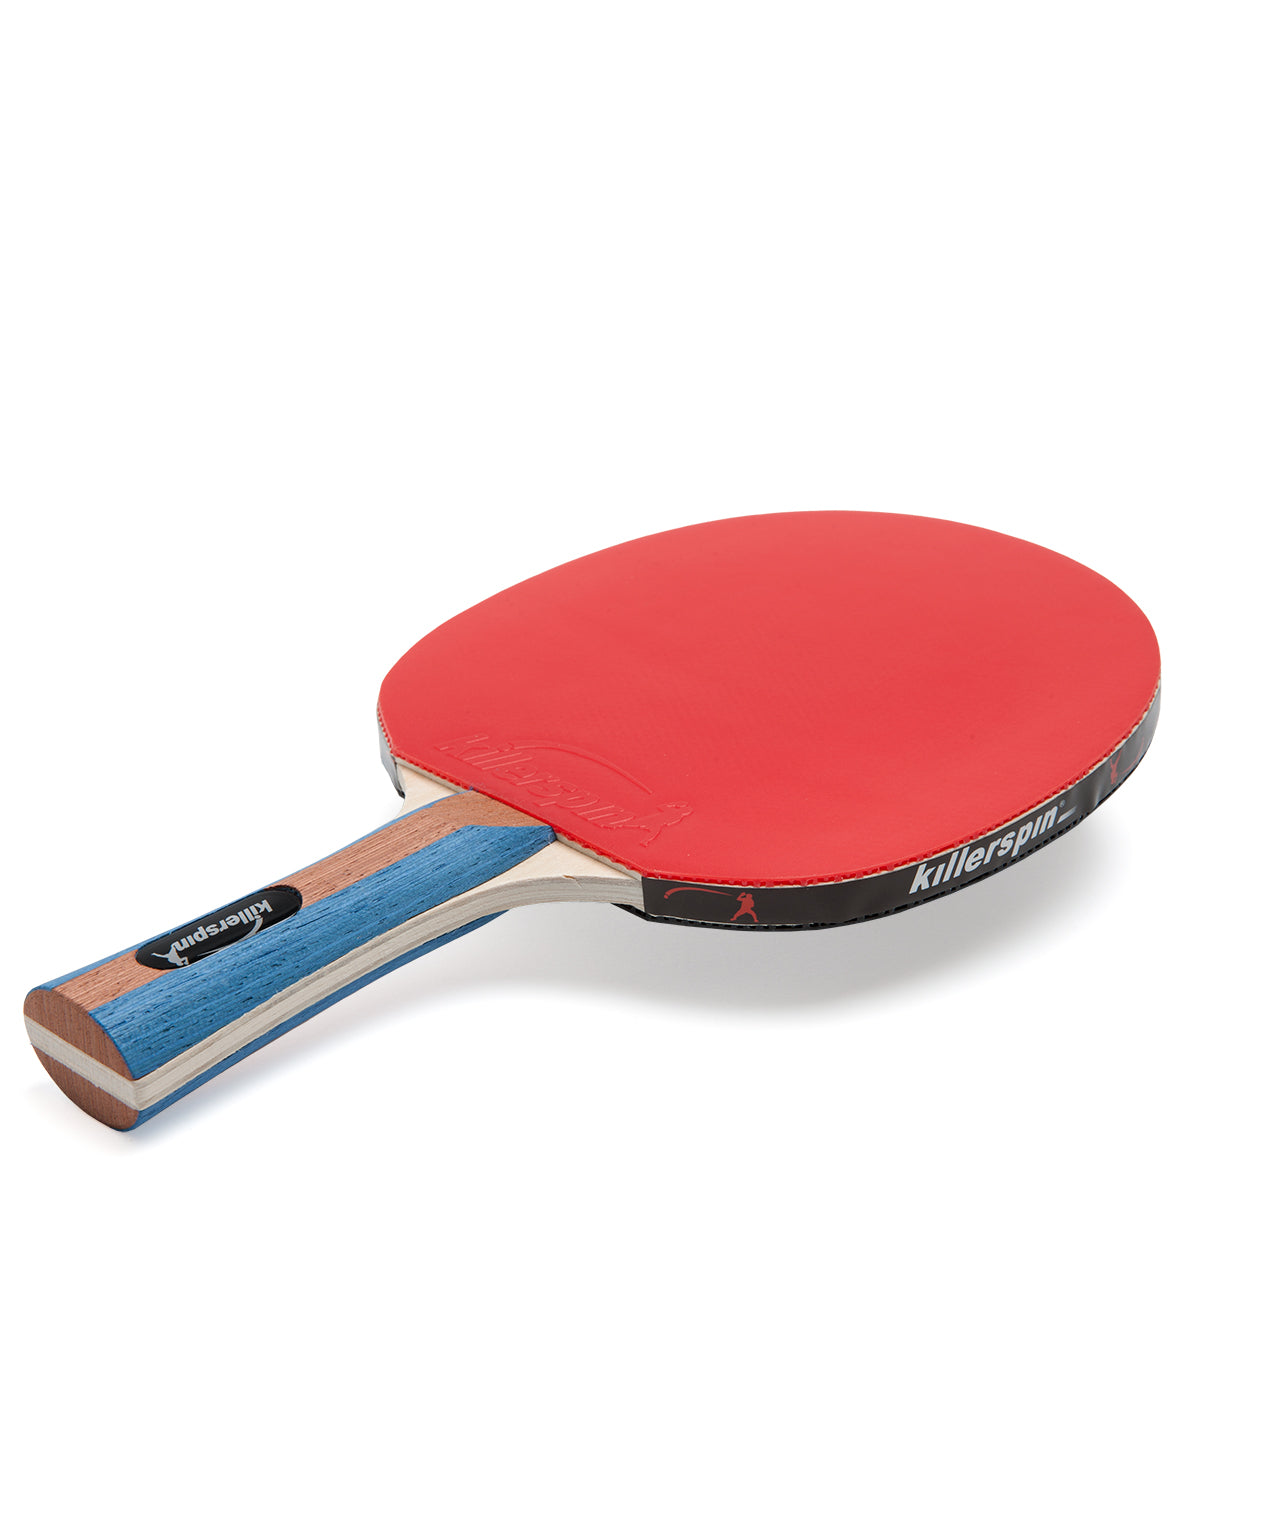 Ermete Ping Pong Paddles Set, 4 Player Table Tennis Paddles Kit